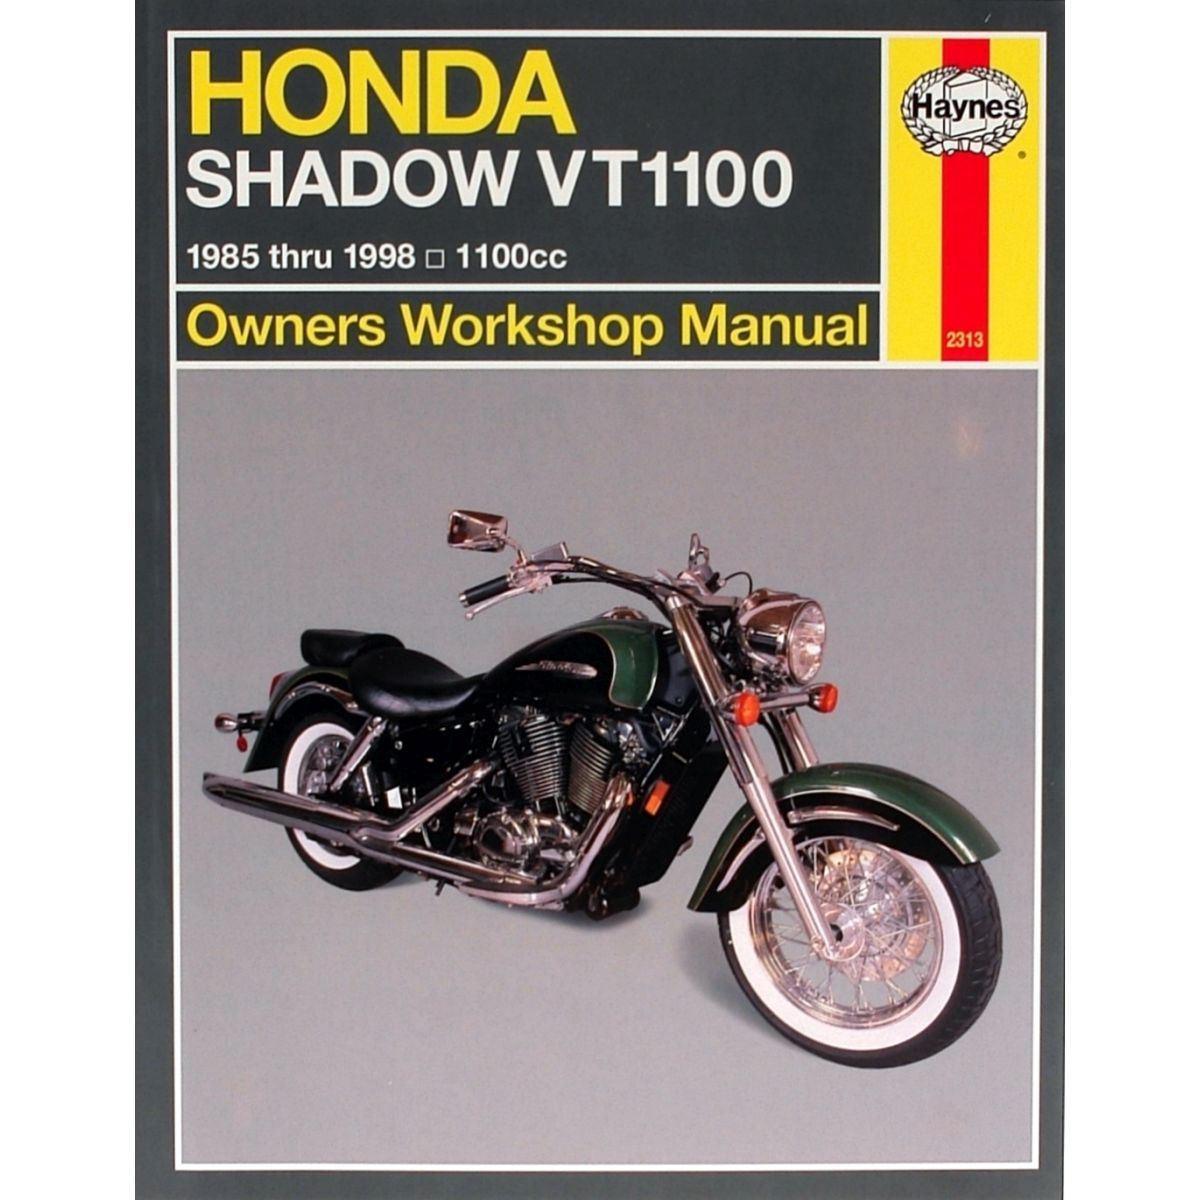 Honda shadow 1100: фото, обзор, характеристики, отзывы